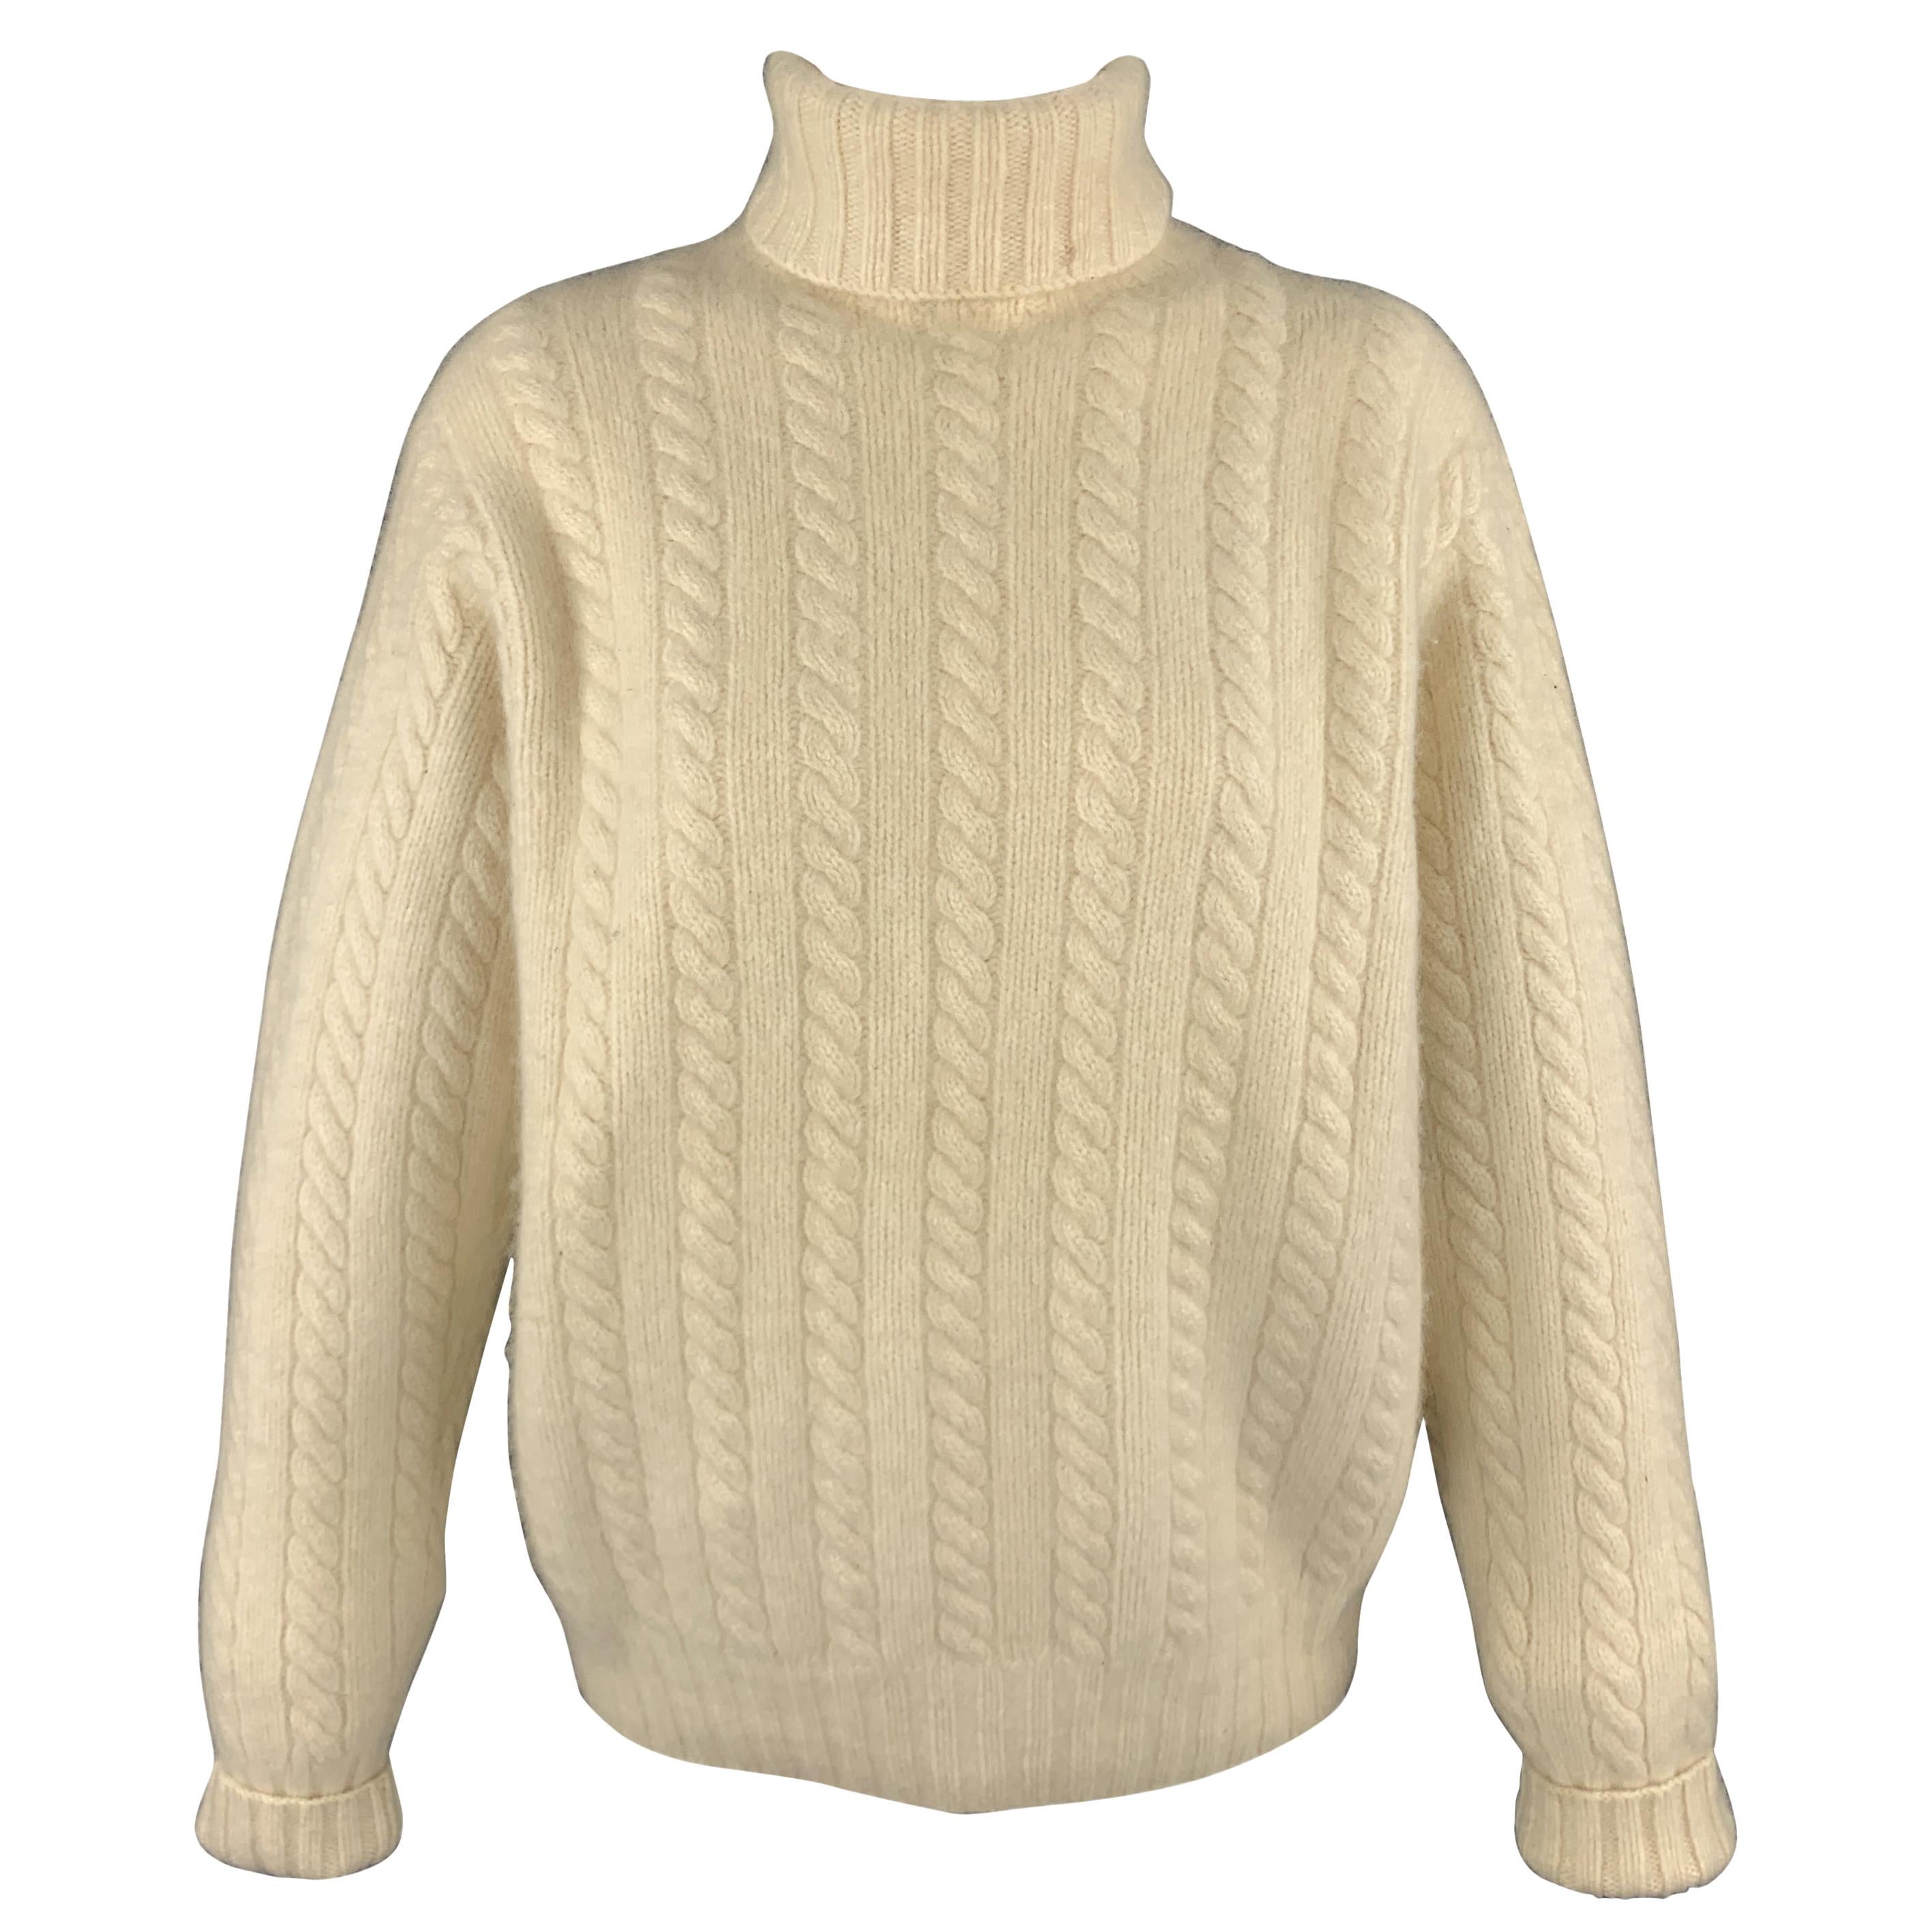 RALPH LAUREN Size L Cream Cashmere Cableknit Rolled Turtleneck Sweater